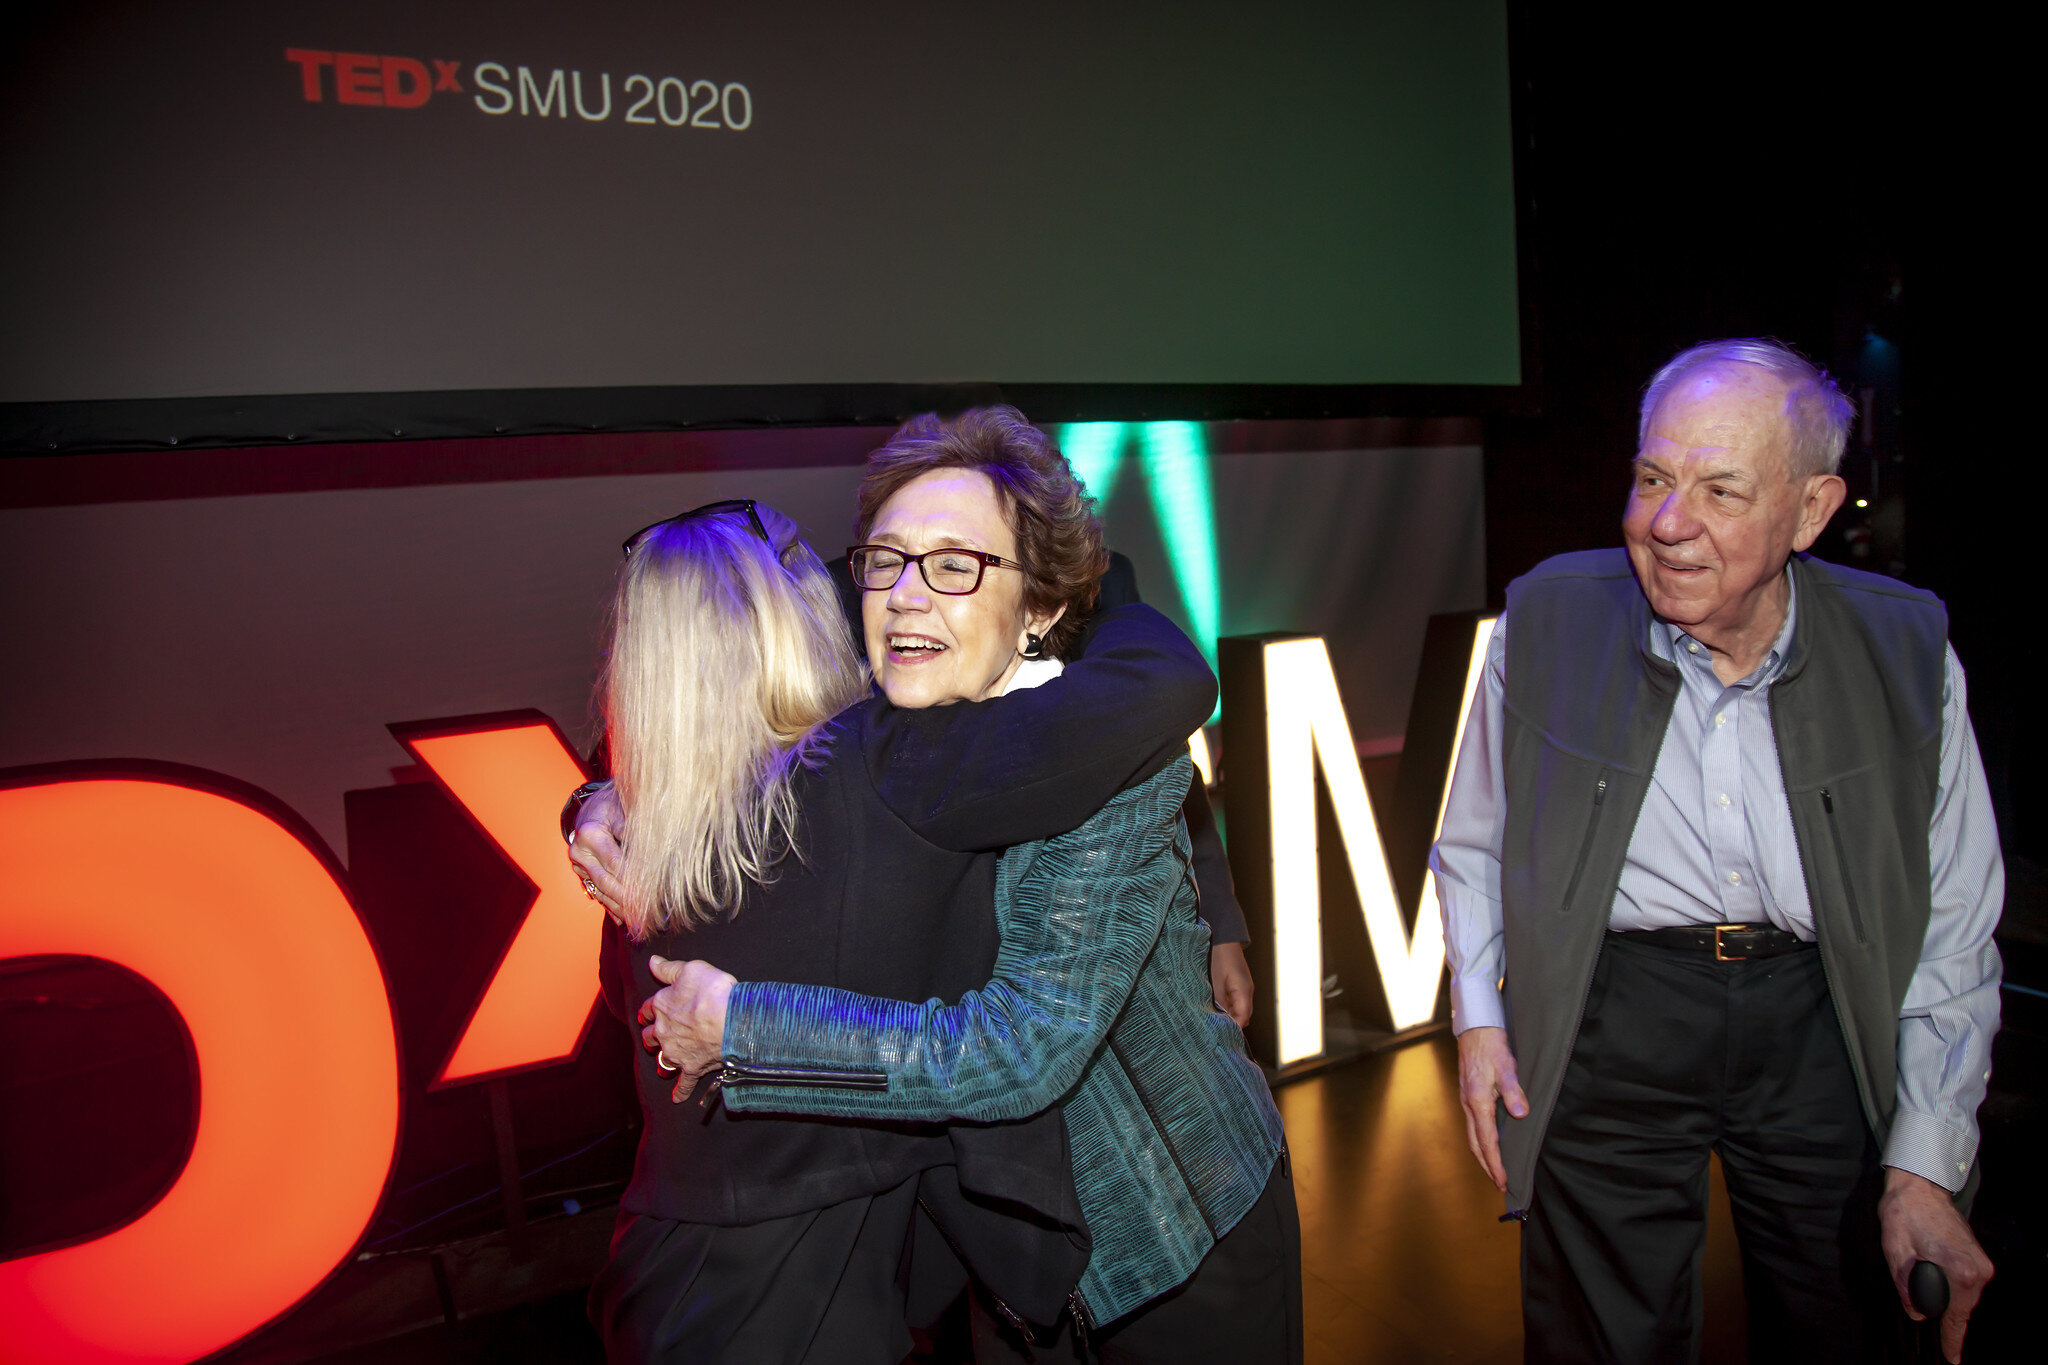 TEDxSMU 2020